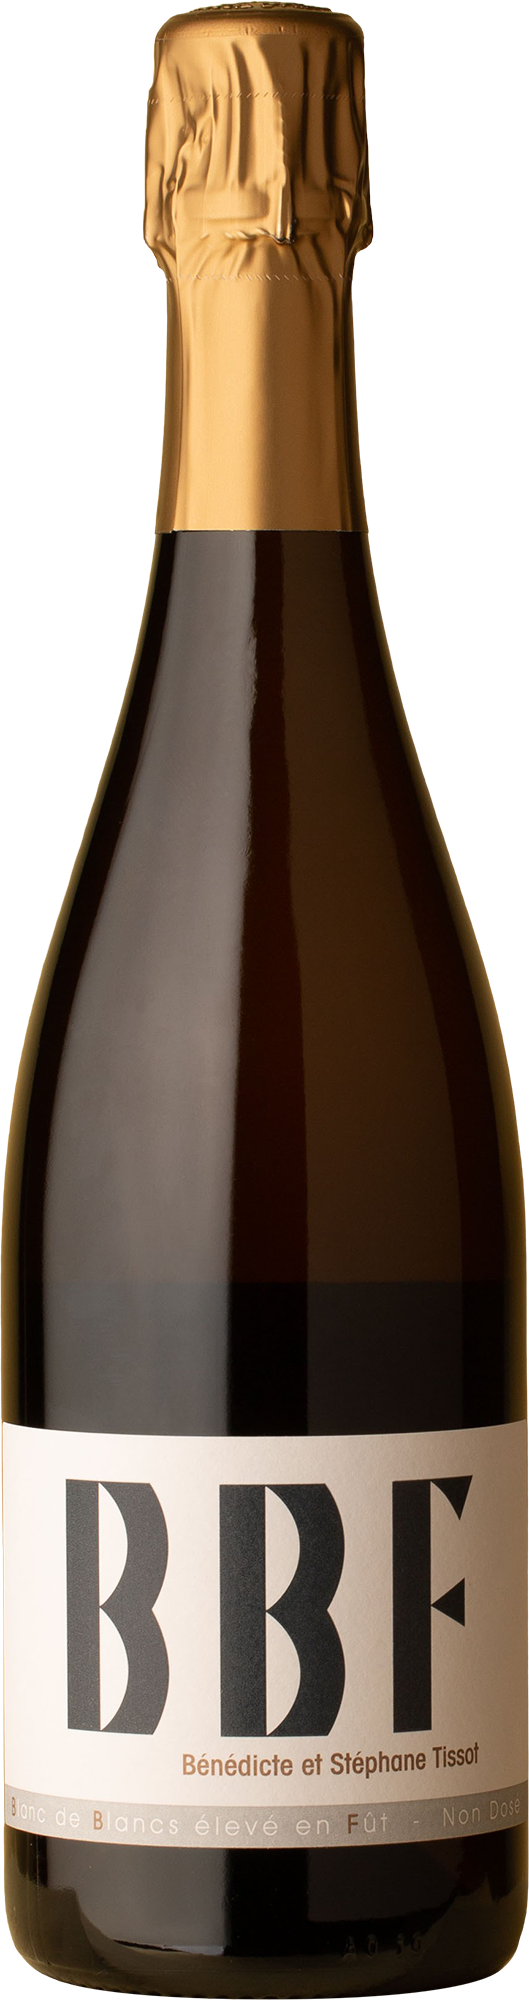 Tissot - BBF Cremant du Jura NV Sparkling Wine